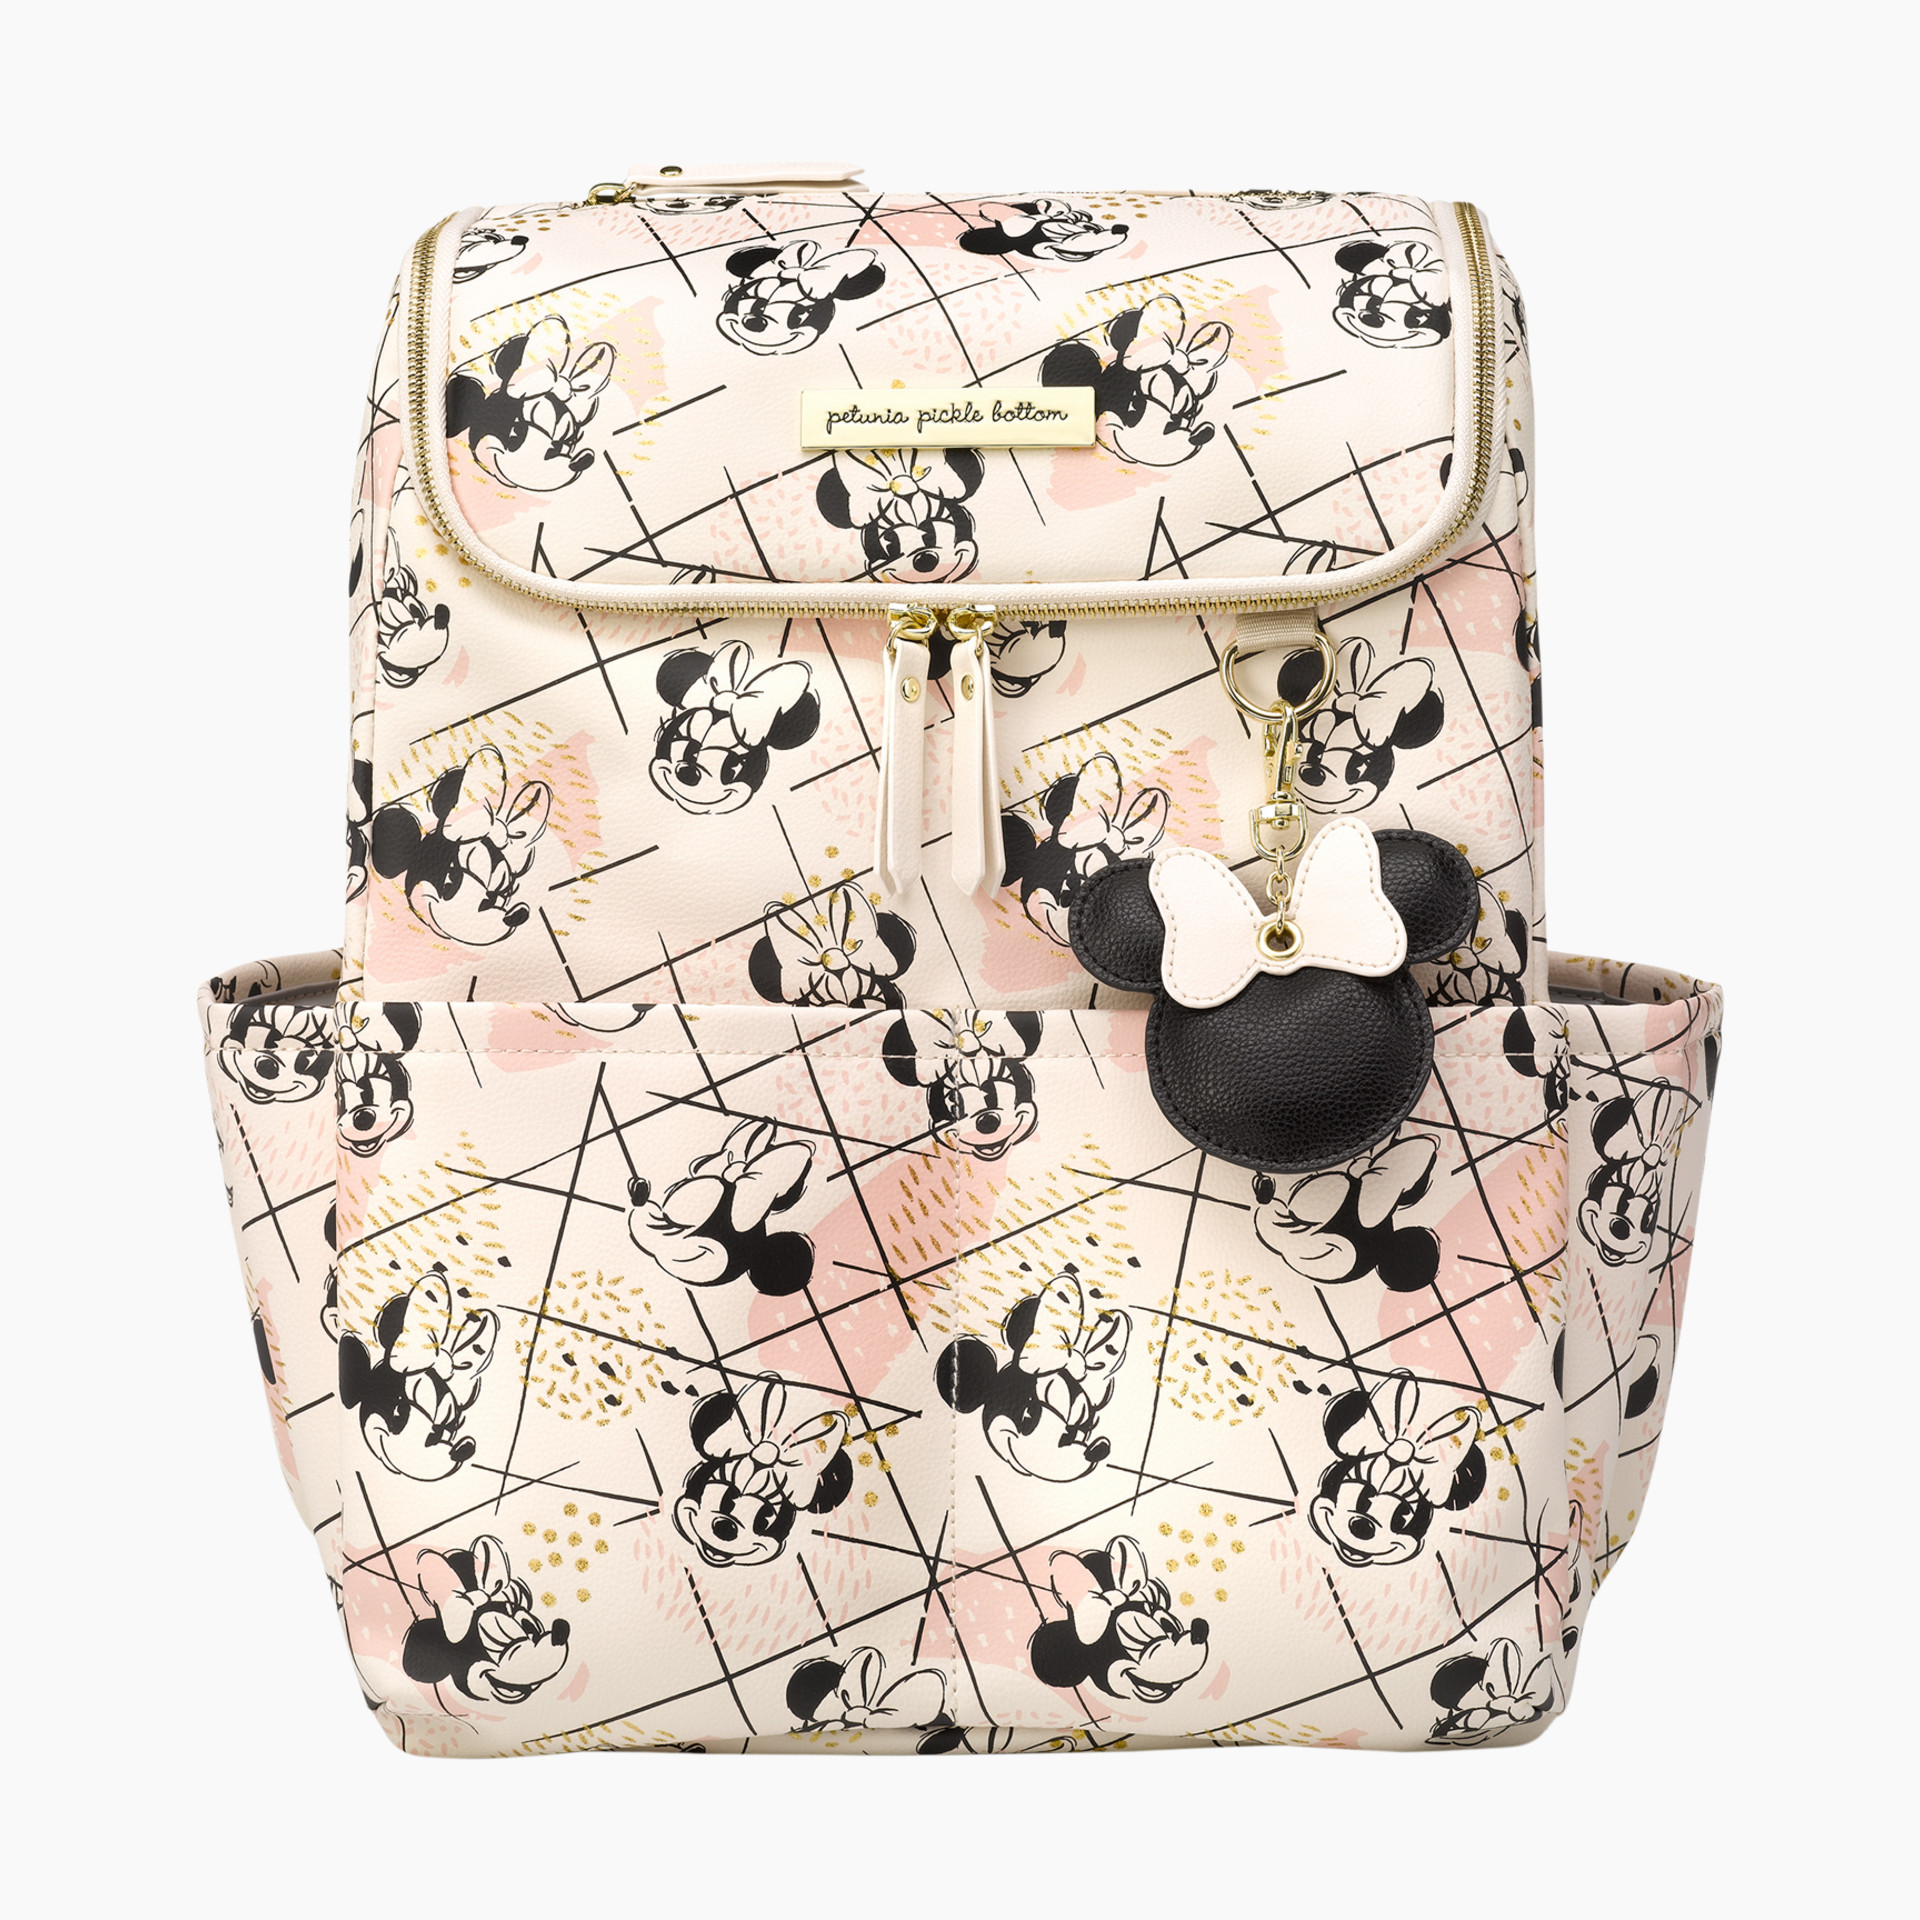 Petunia Pickle Bottom Meta Diaper Backpack Love Mickey Mouse